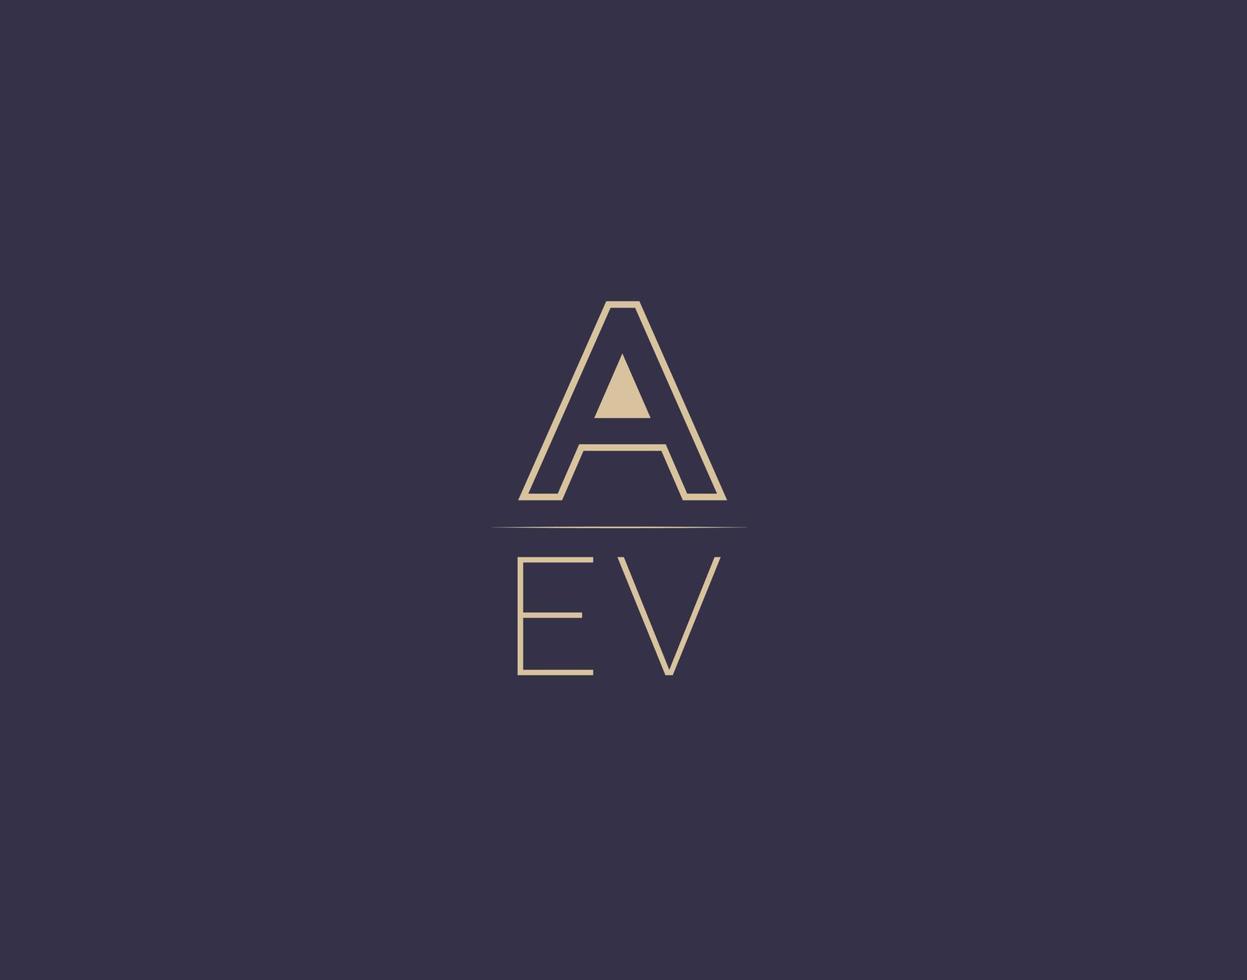 aev brief logo ontwerp modern minimalistische vector afbeeldingen